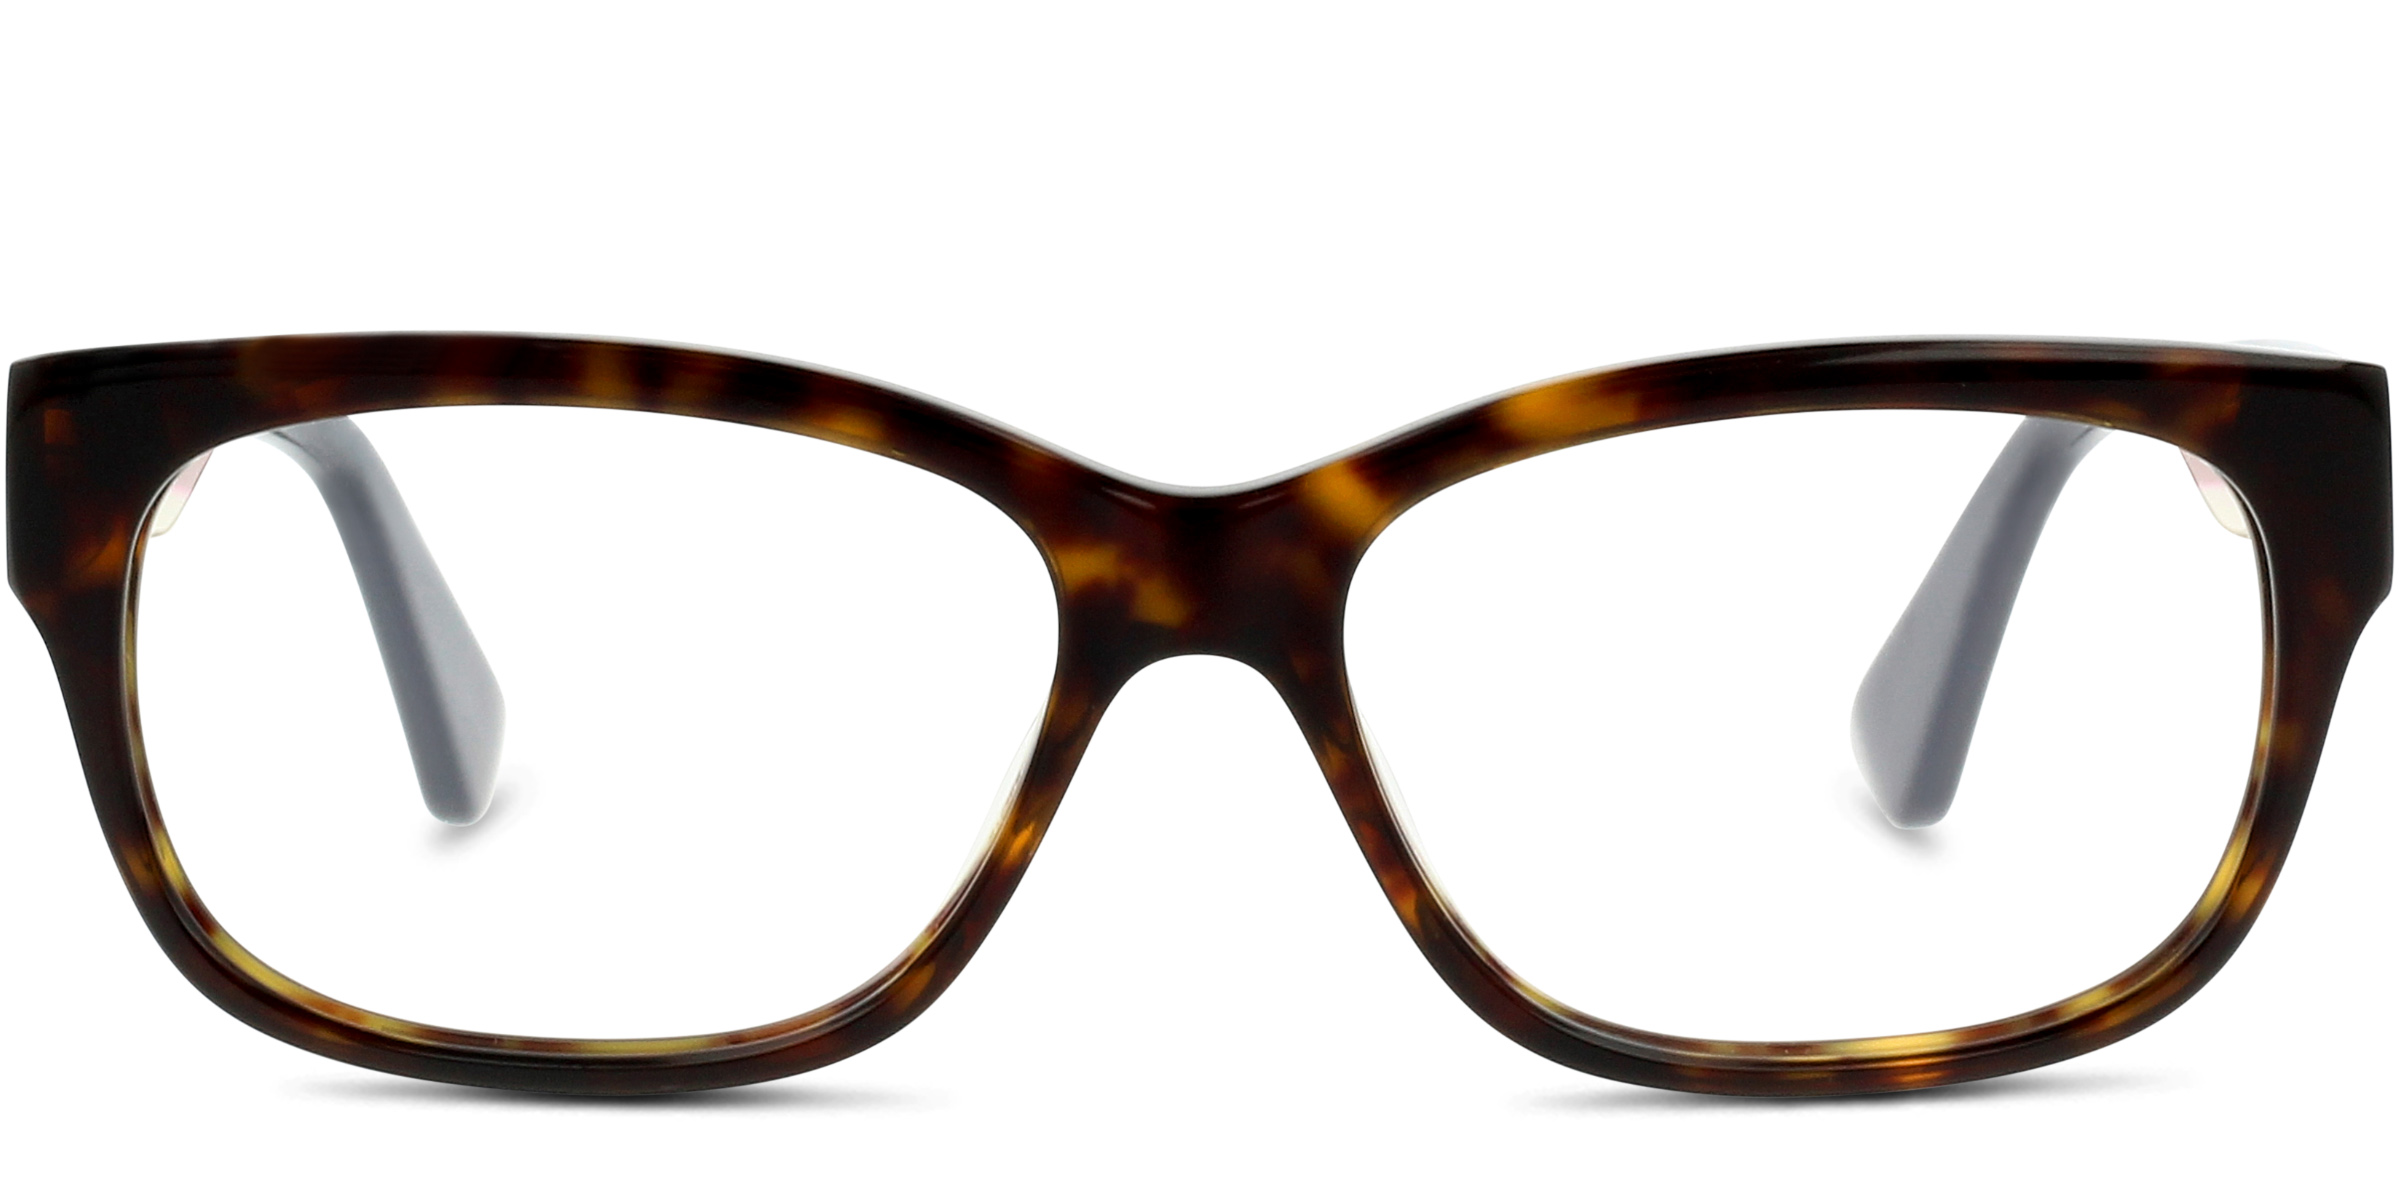 Buy Gucci GG0278O eyeglasses for women at For Eyes